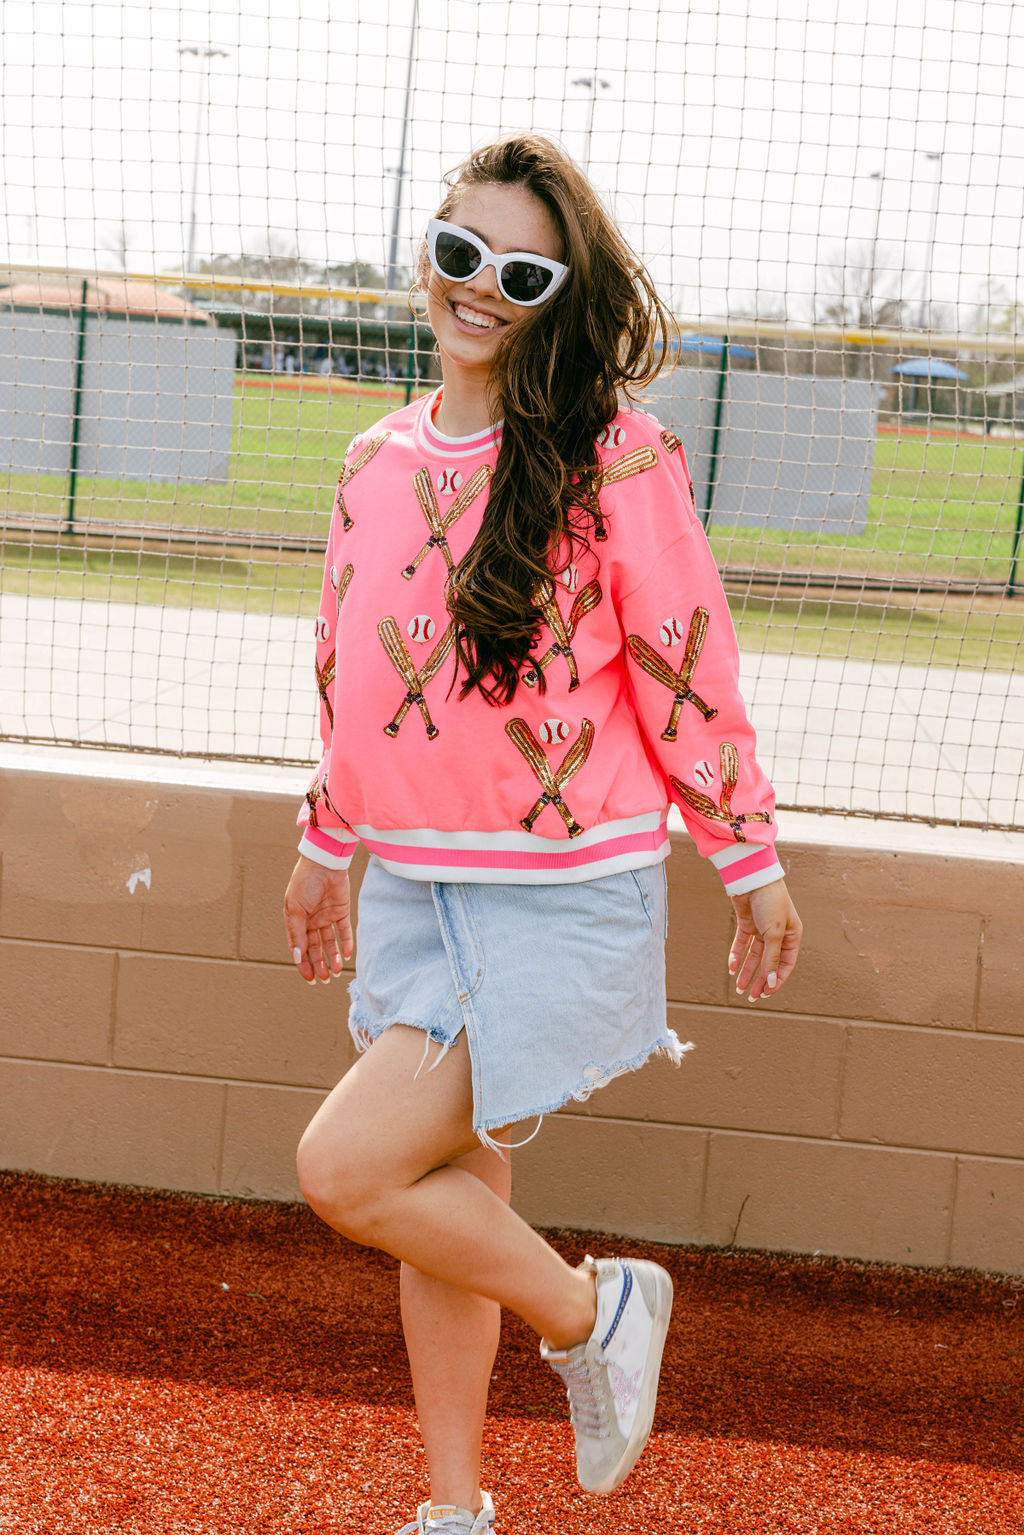 Neon Pink Scattered Baseball Bat Sweatshirt